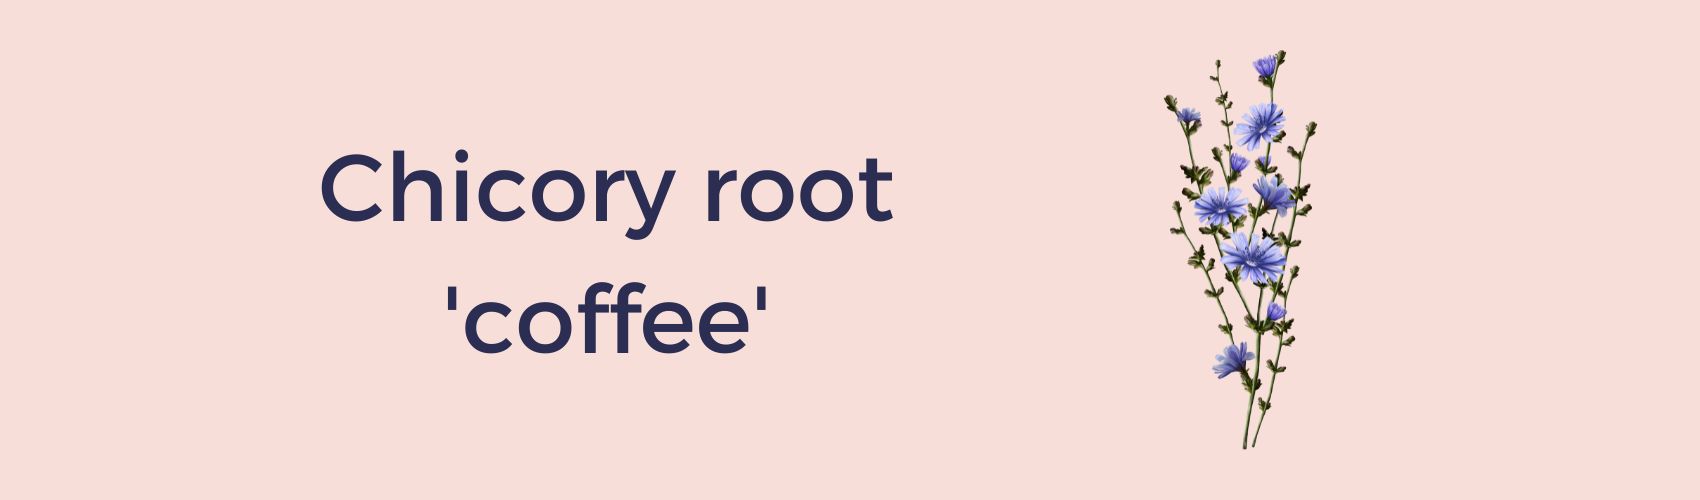 Chicory root coffee